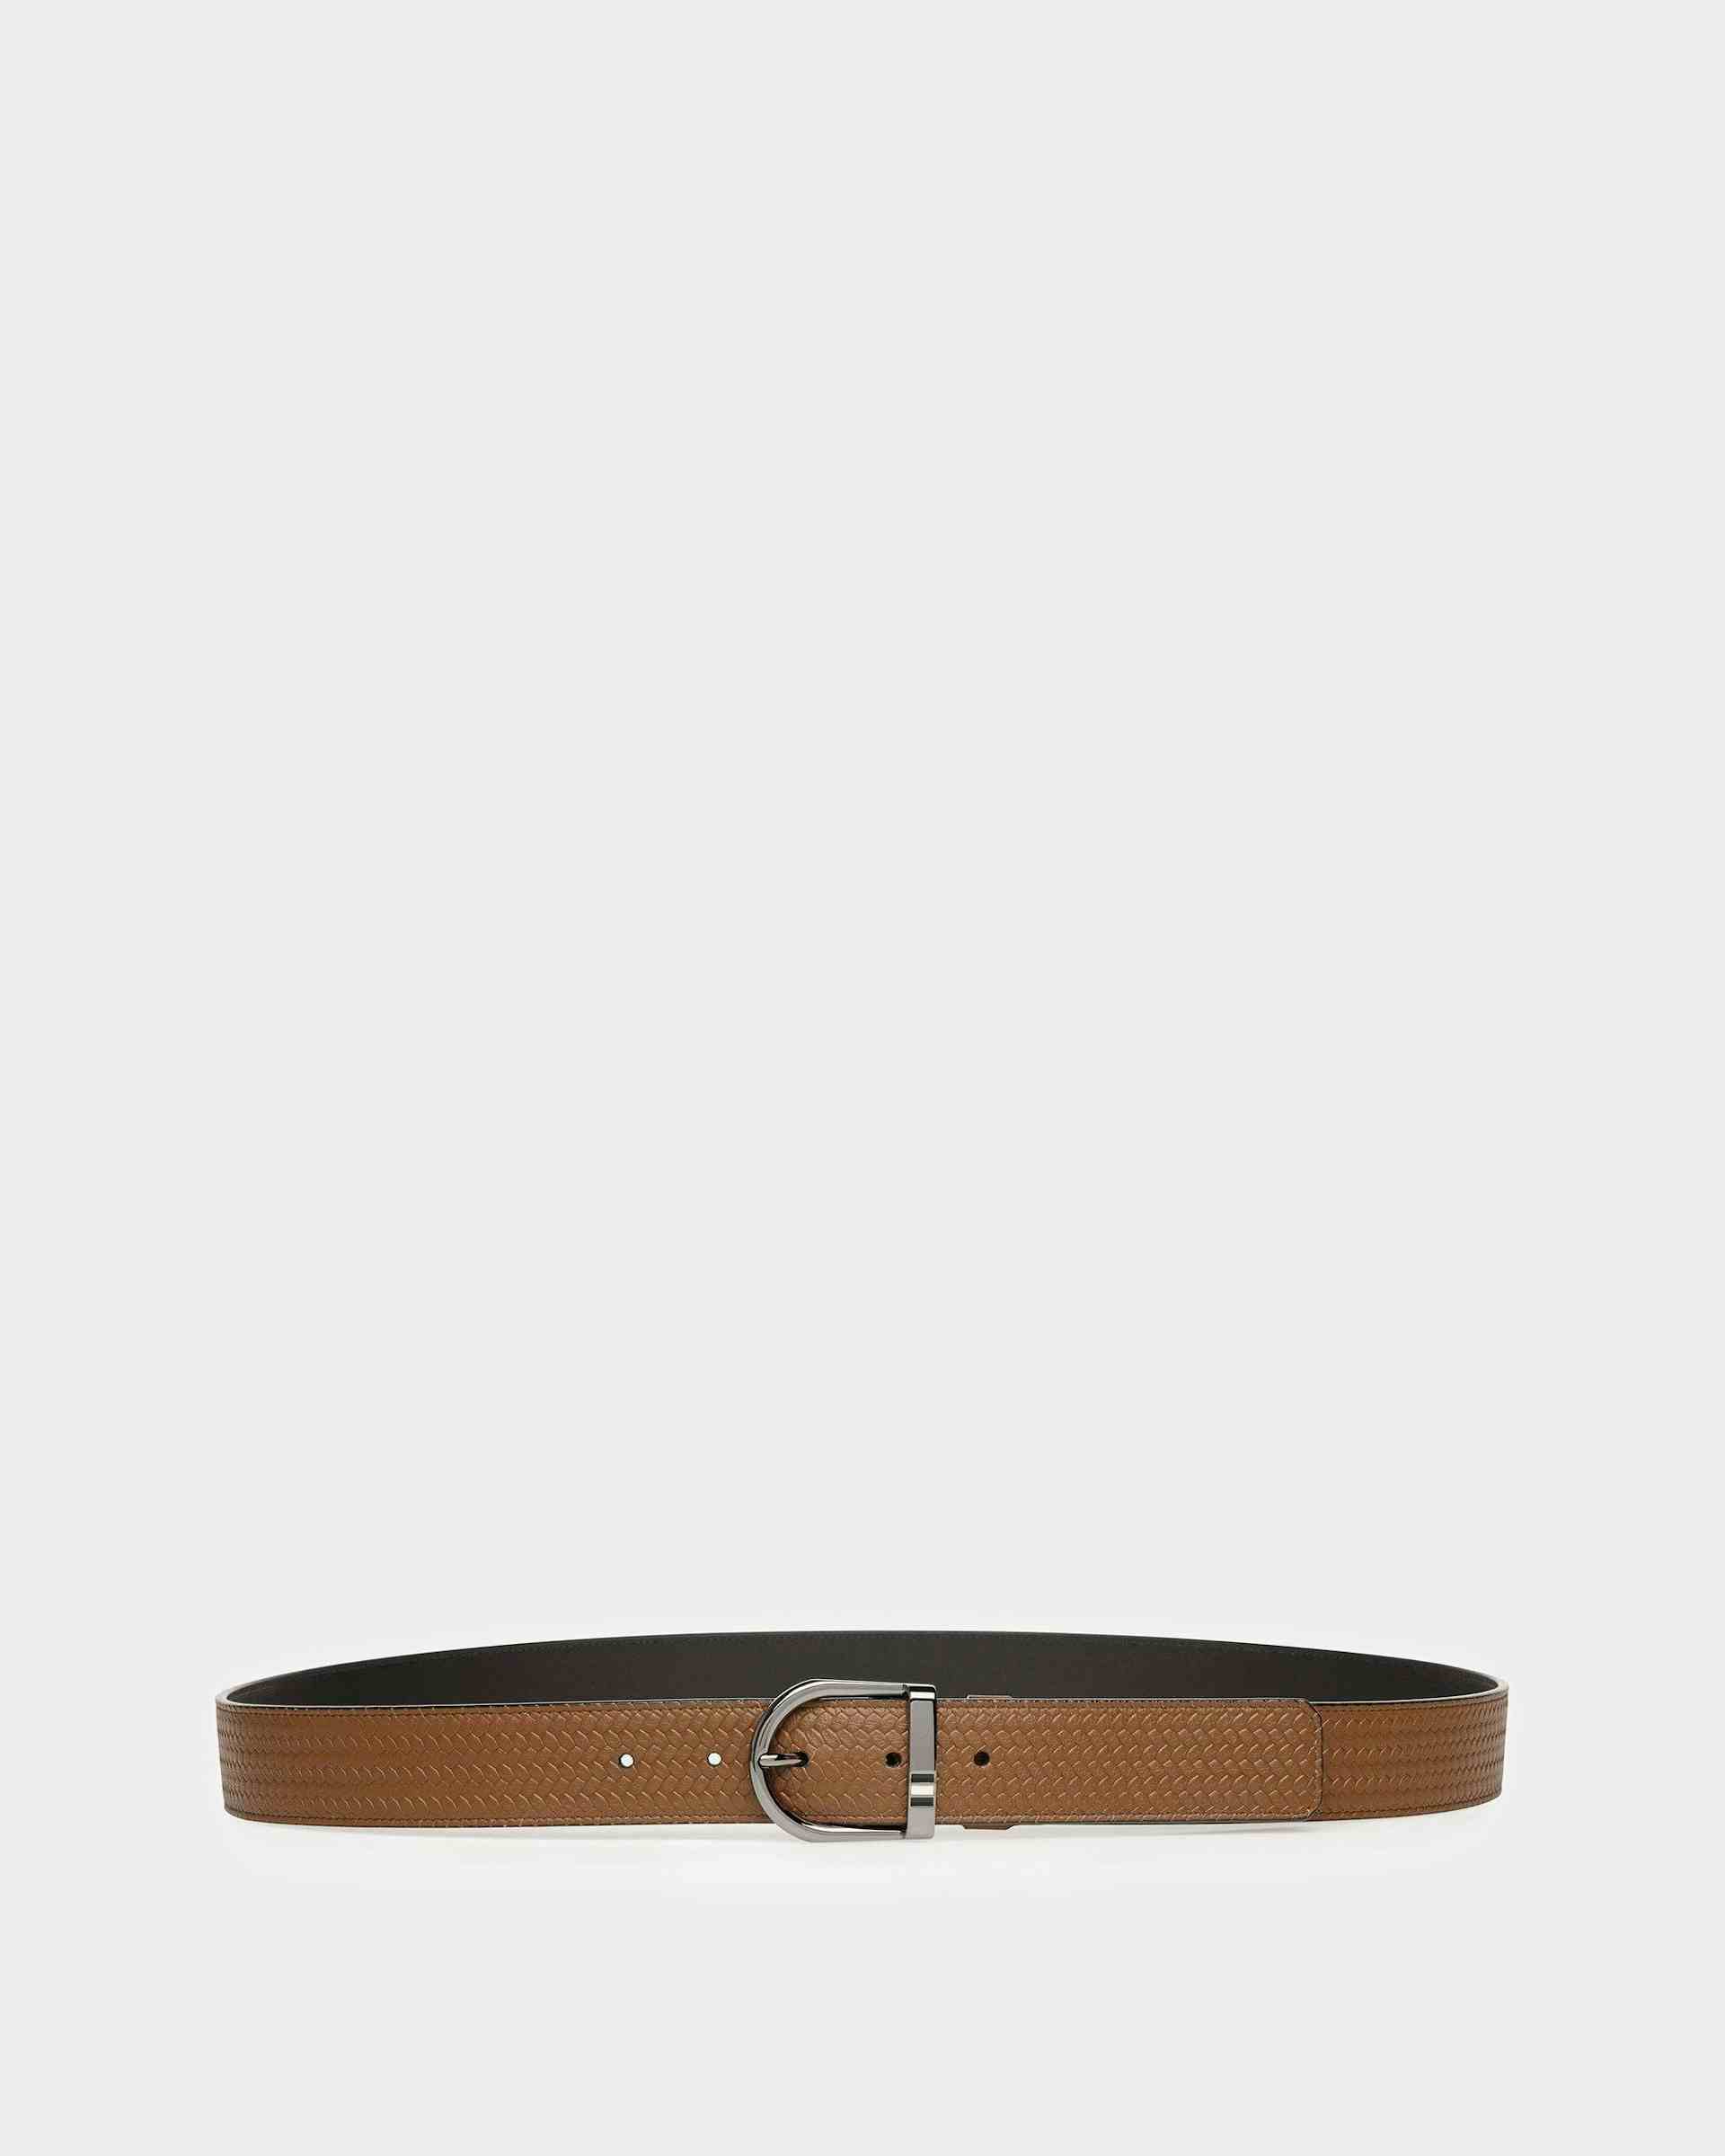 Darkon Leather Belt In Brown And Black - Men's - Bally